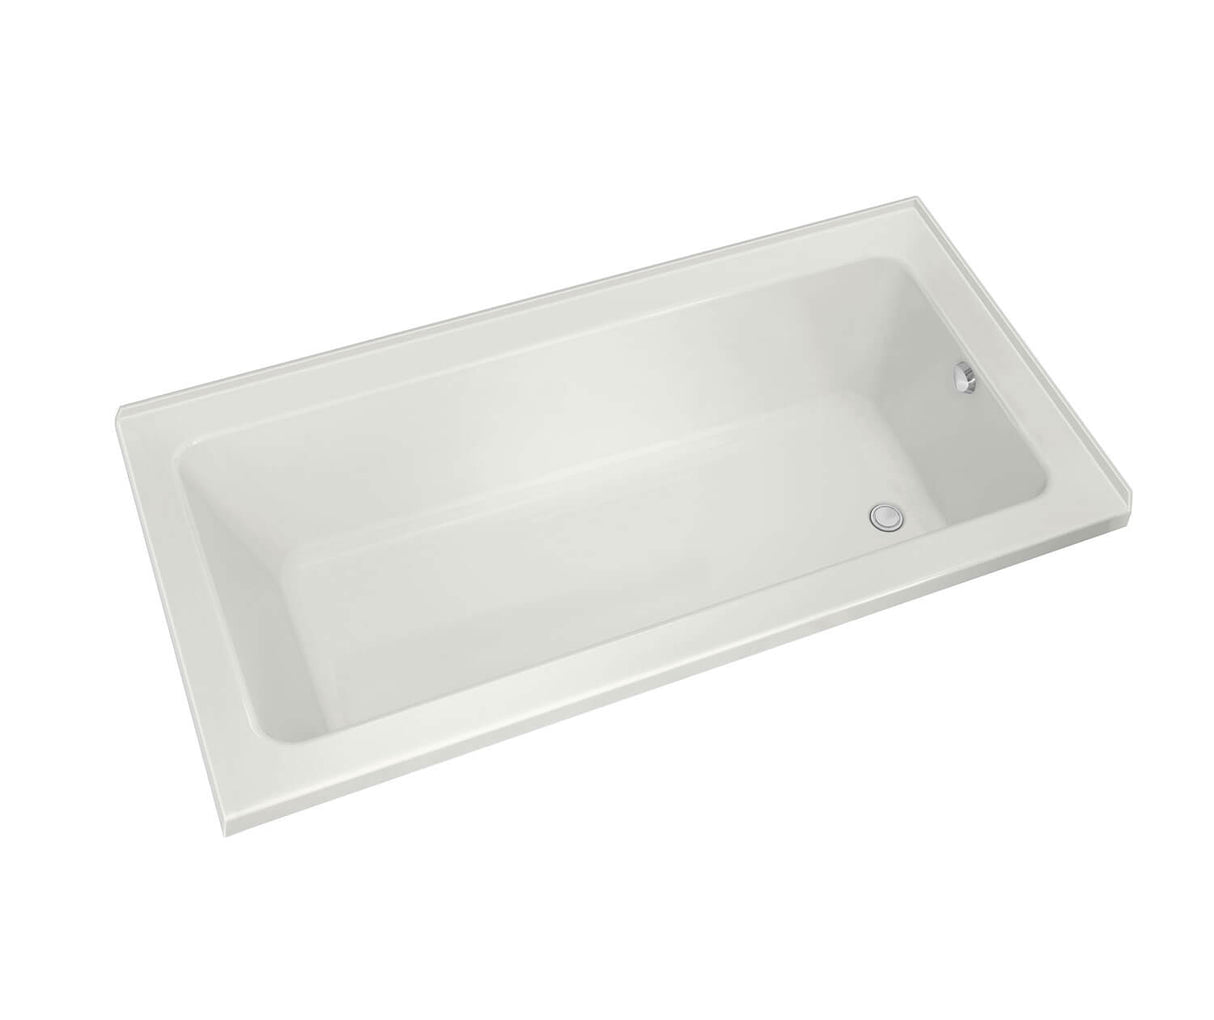 MAAX 106212-L-097-001 Pose 7236 IF Acrylic Corner Right Left-Hand Drain Combined Whirlpool & Aeroeffect Bathtub in White